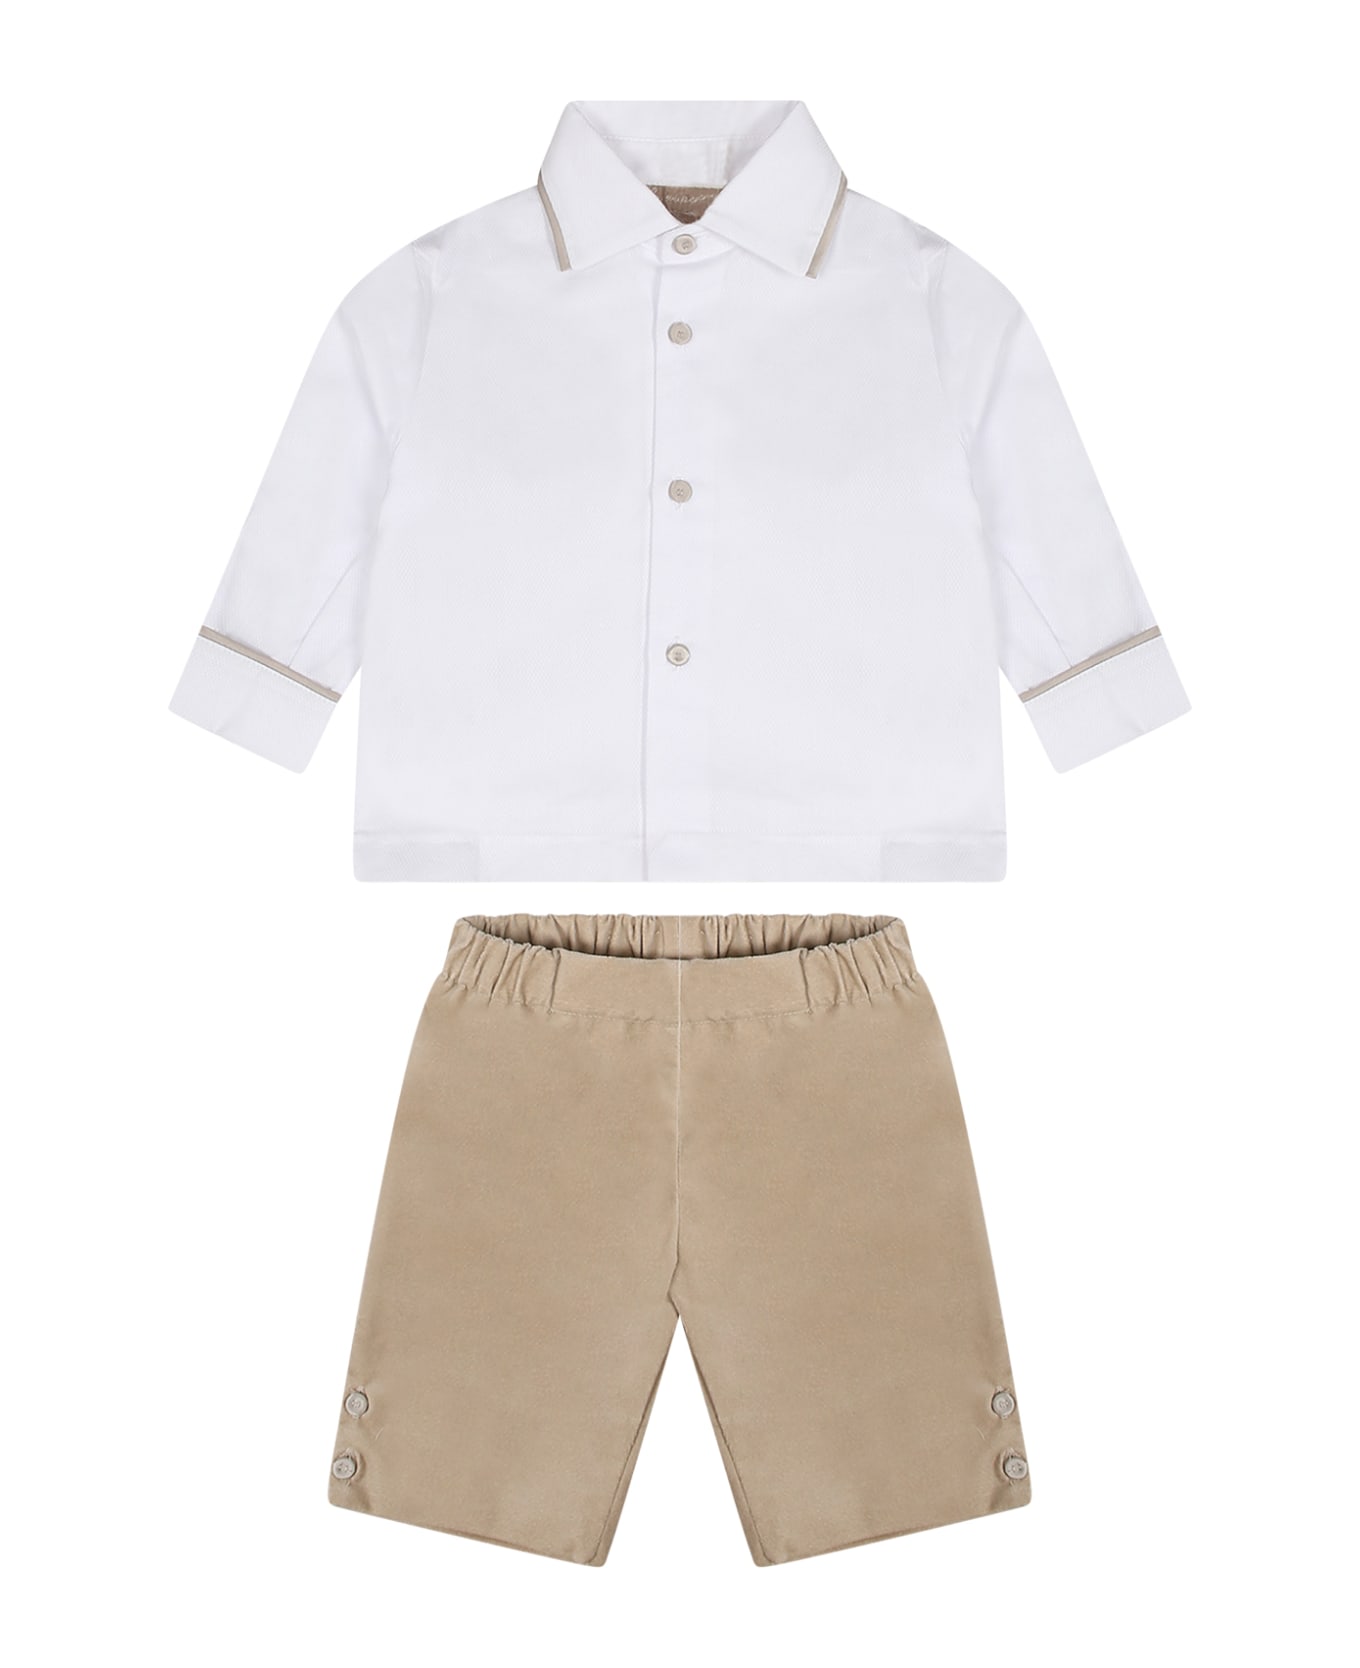 La stupenderia White Suit For Baby Boy - Multicolor